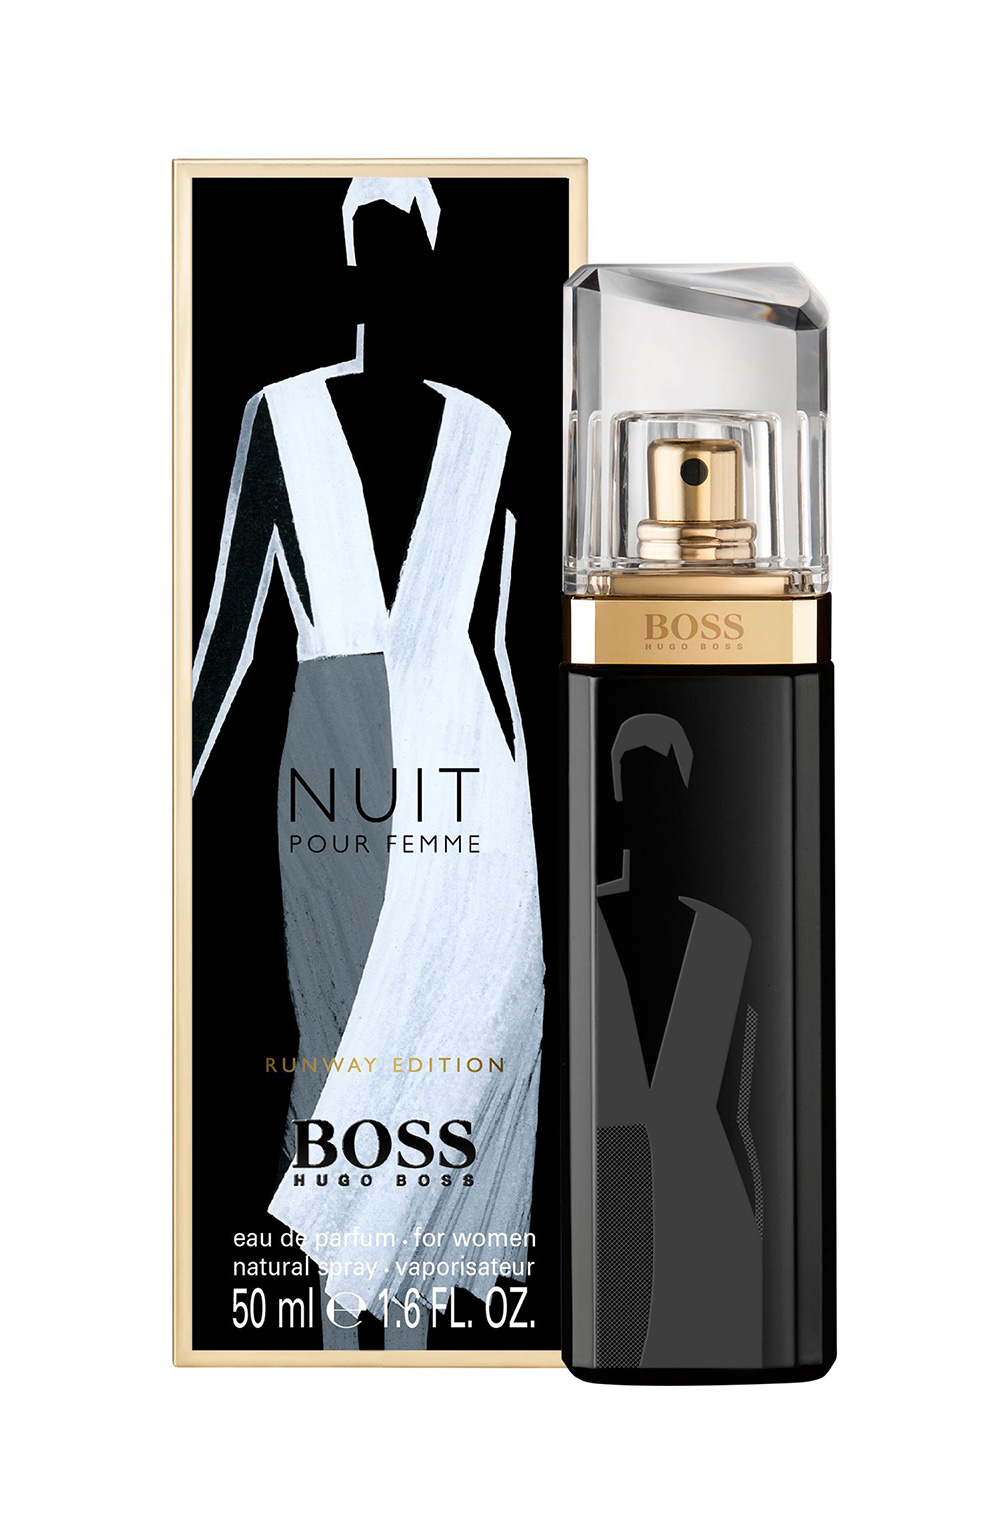 Hugo Boss Nuit Pour Femme Runway Edition